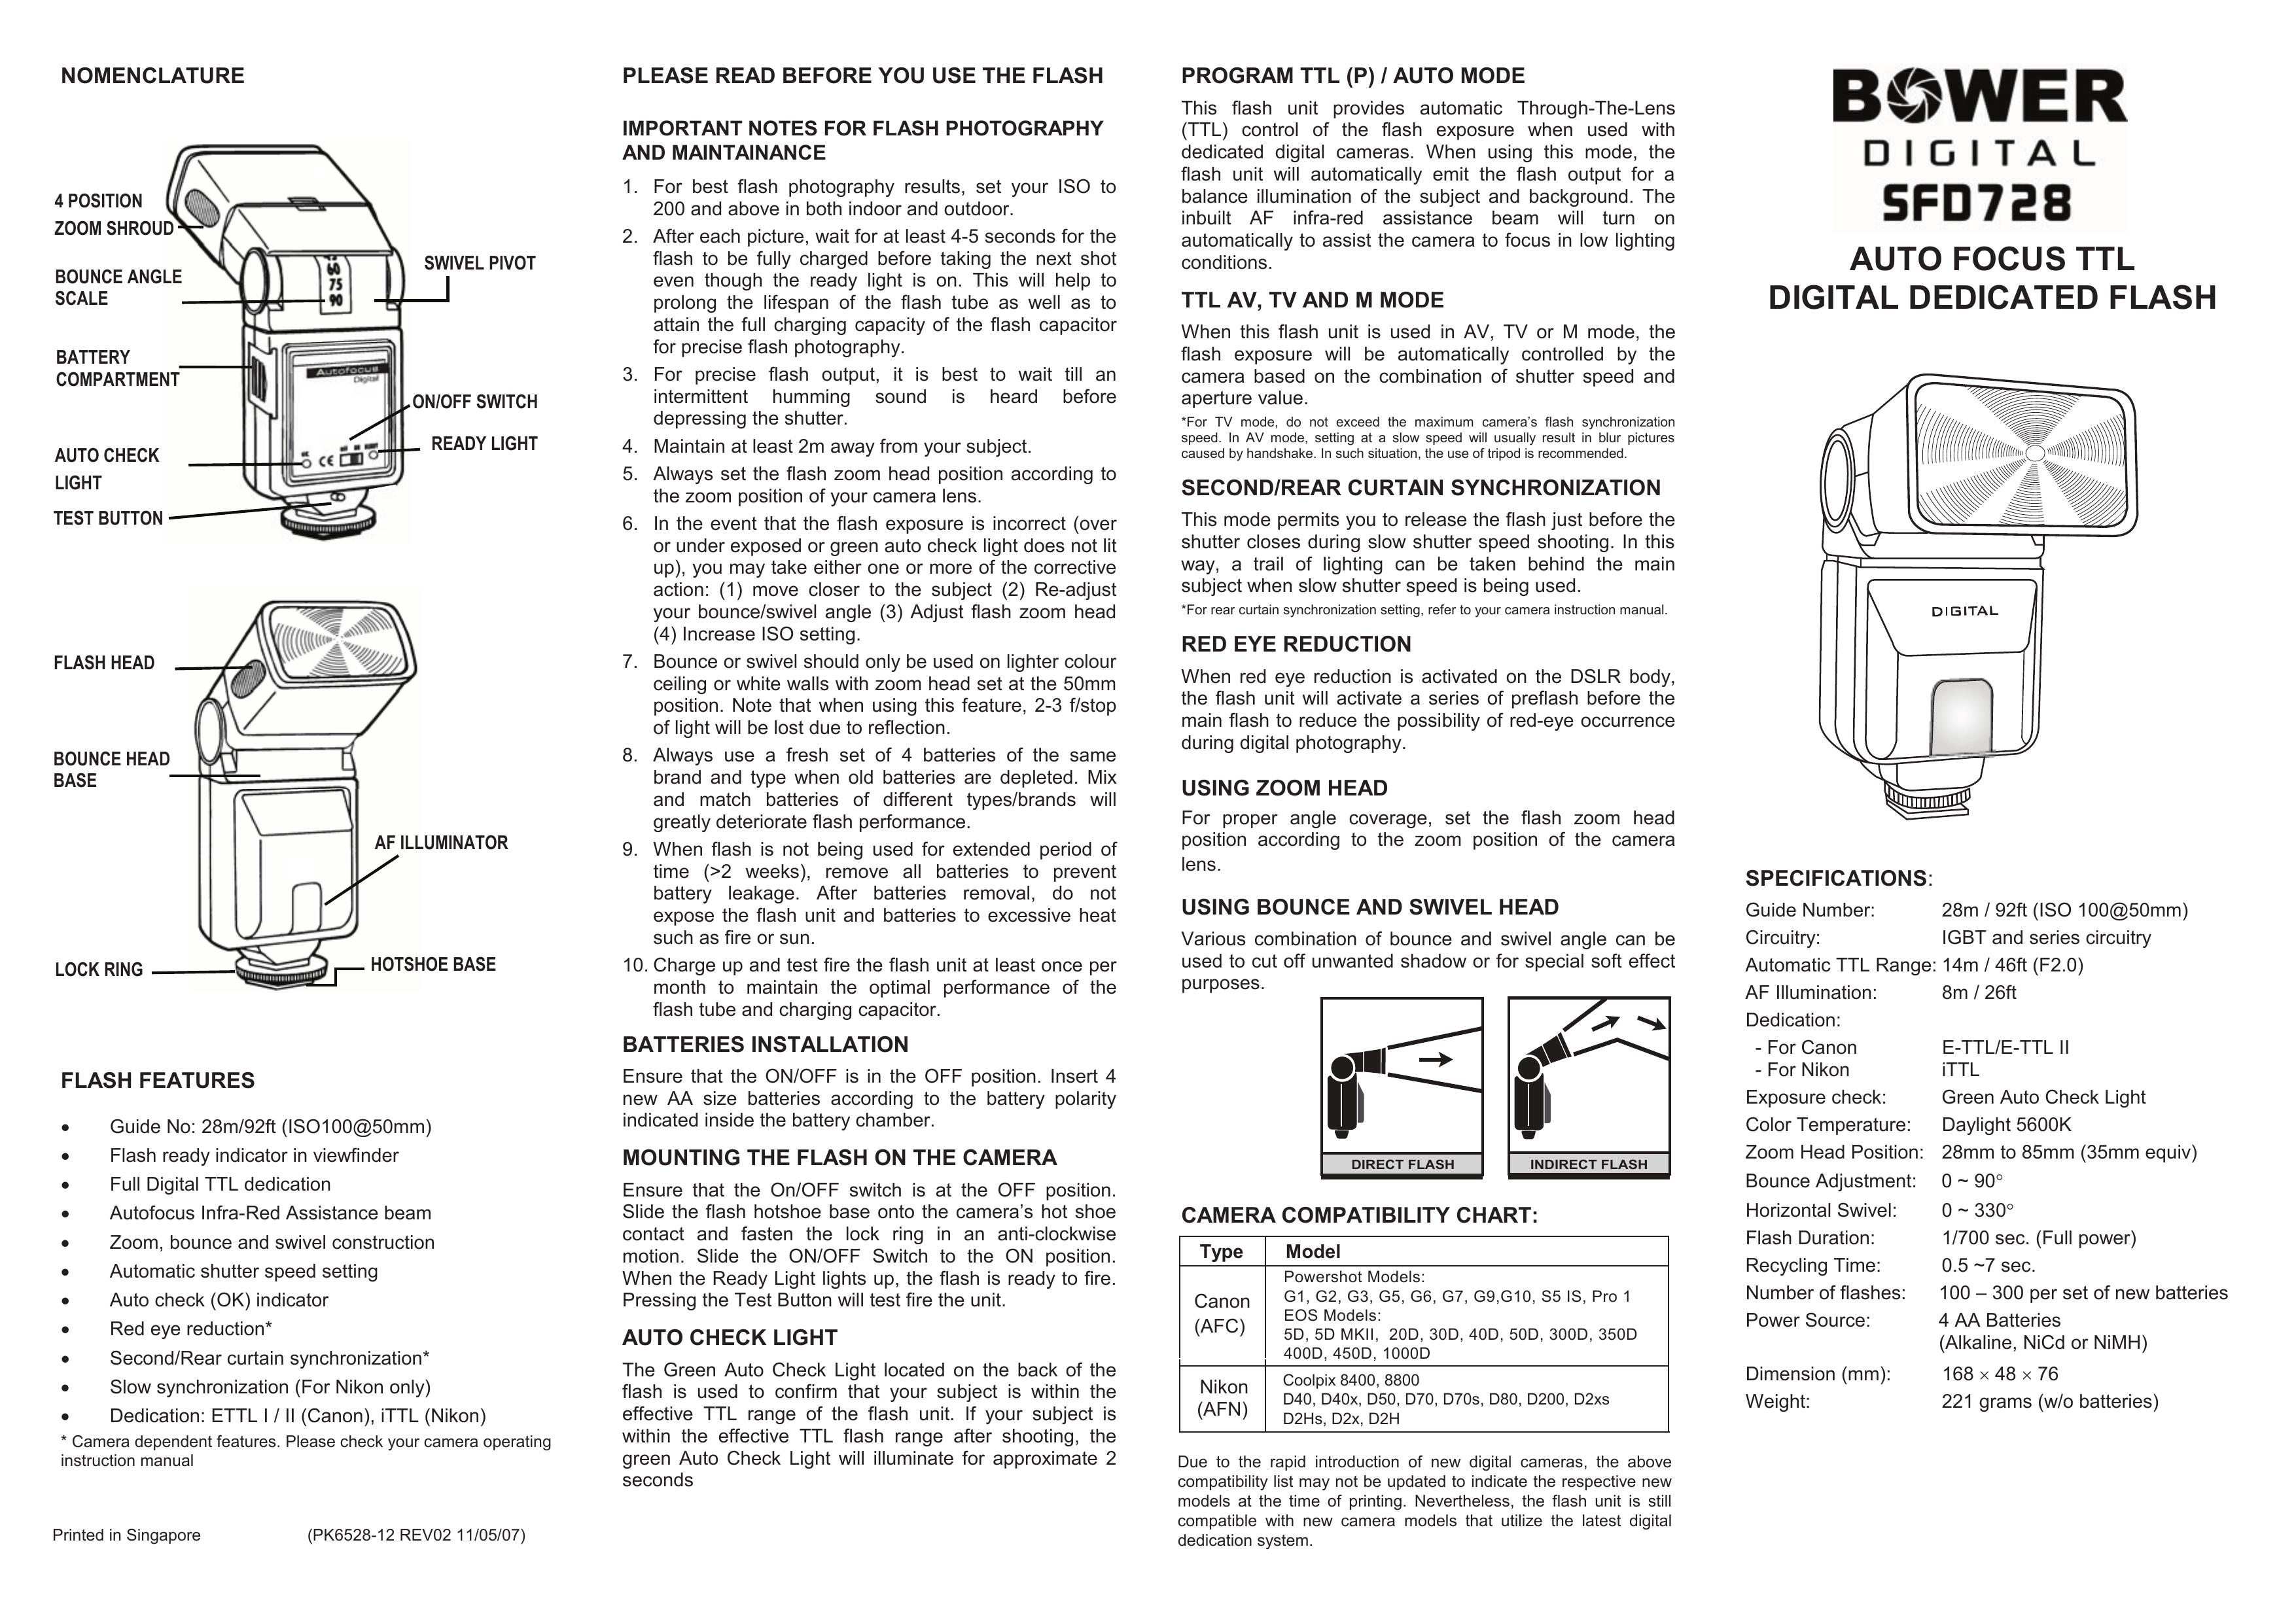 Bower SFD728 Camera Flash User Manual